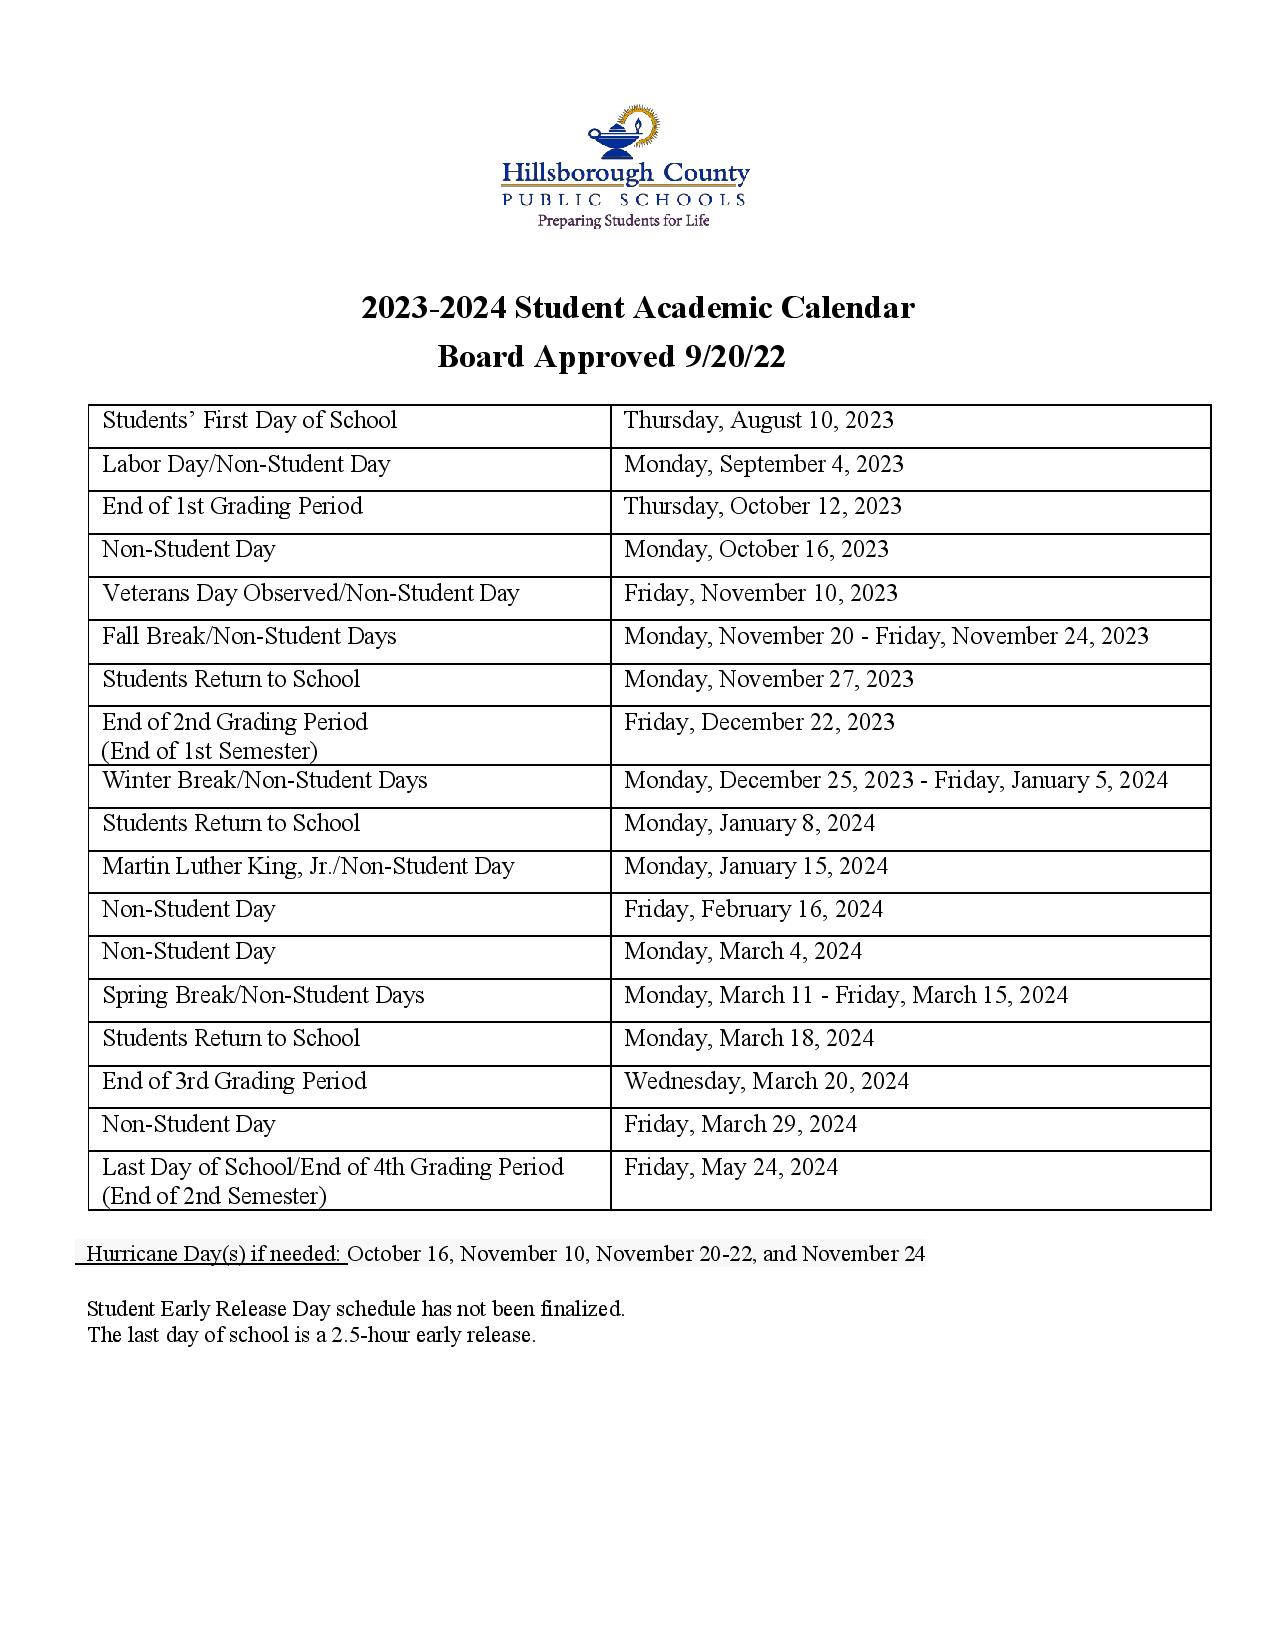 Hillsborough County Public Schools Calendar Holidays 2023-2024